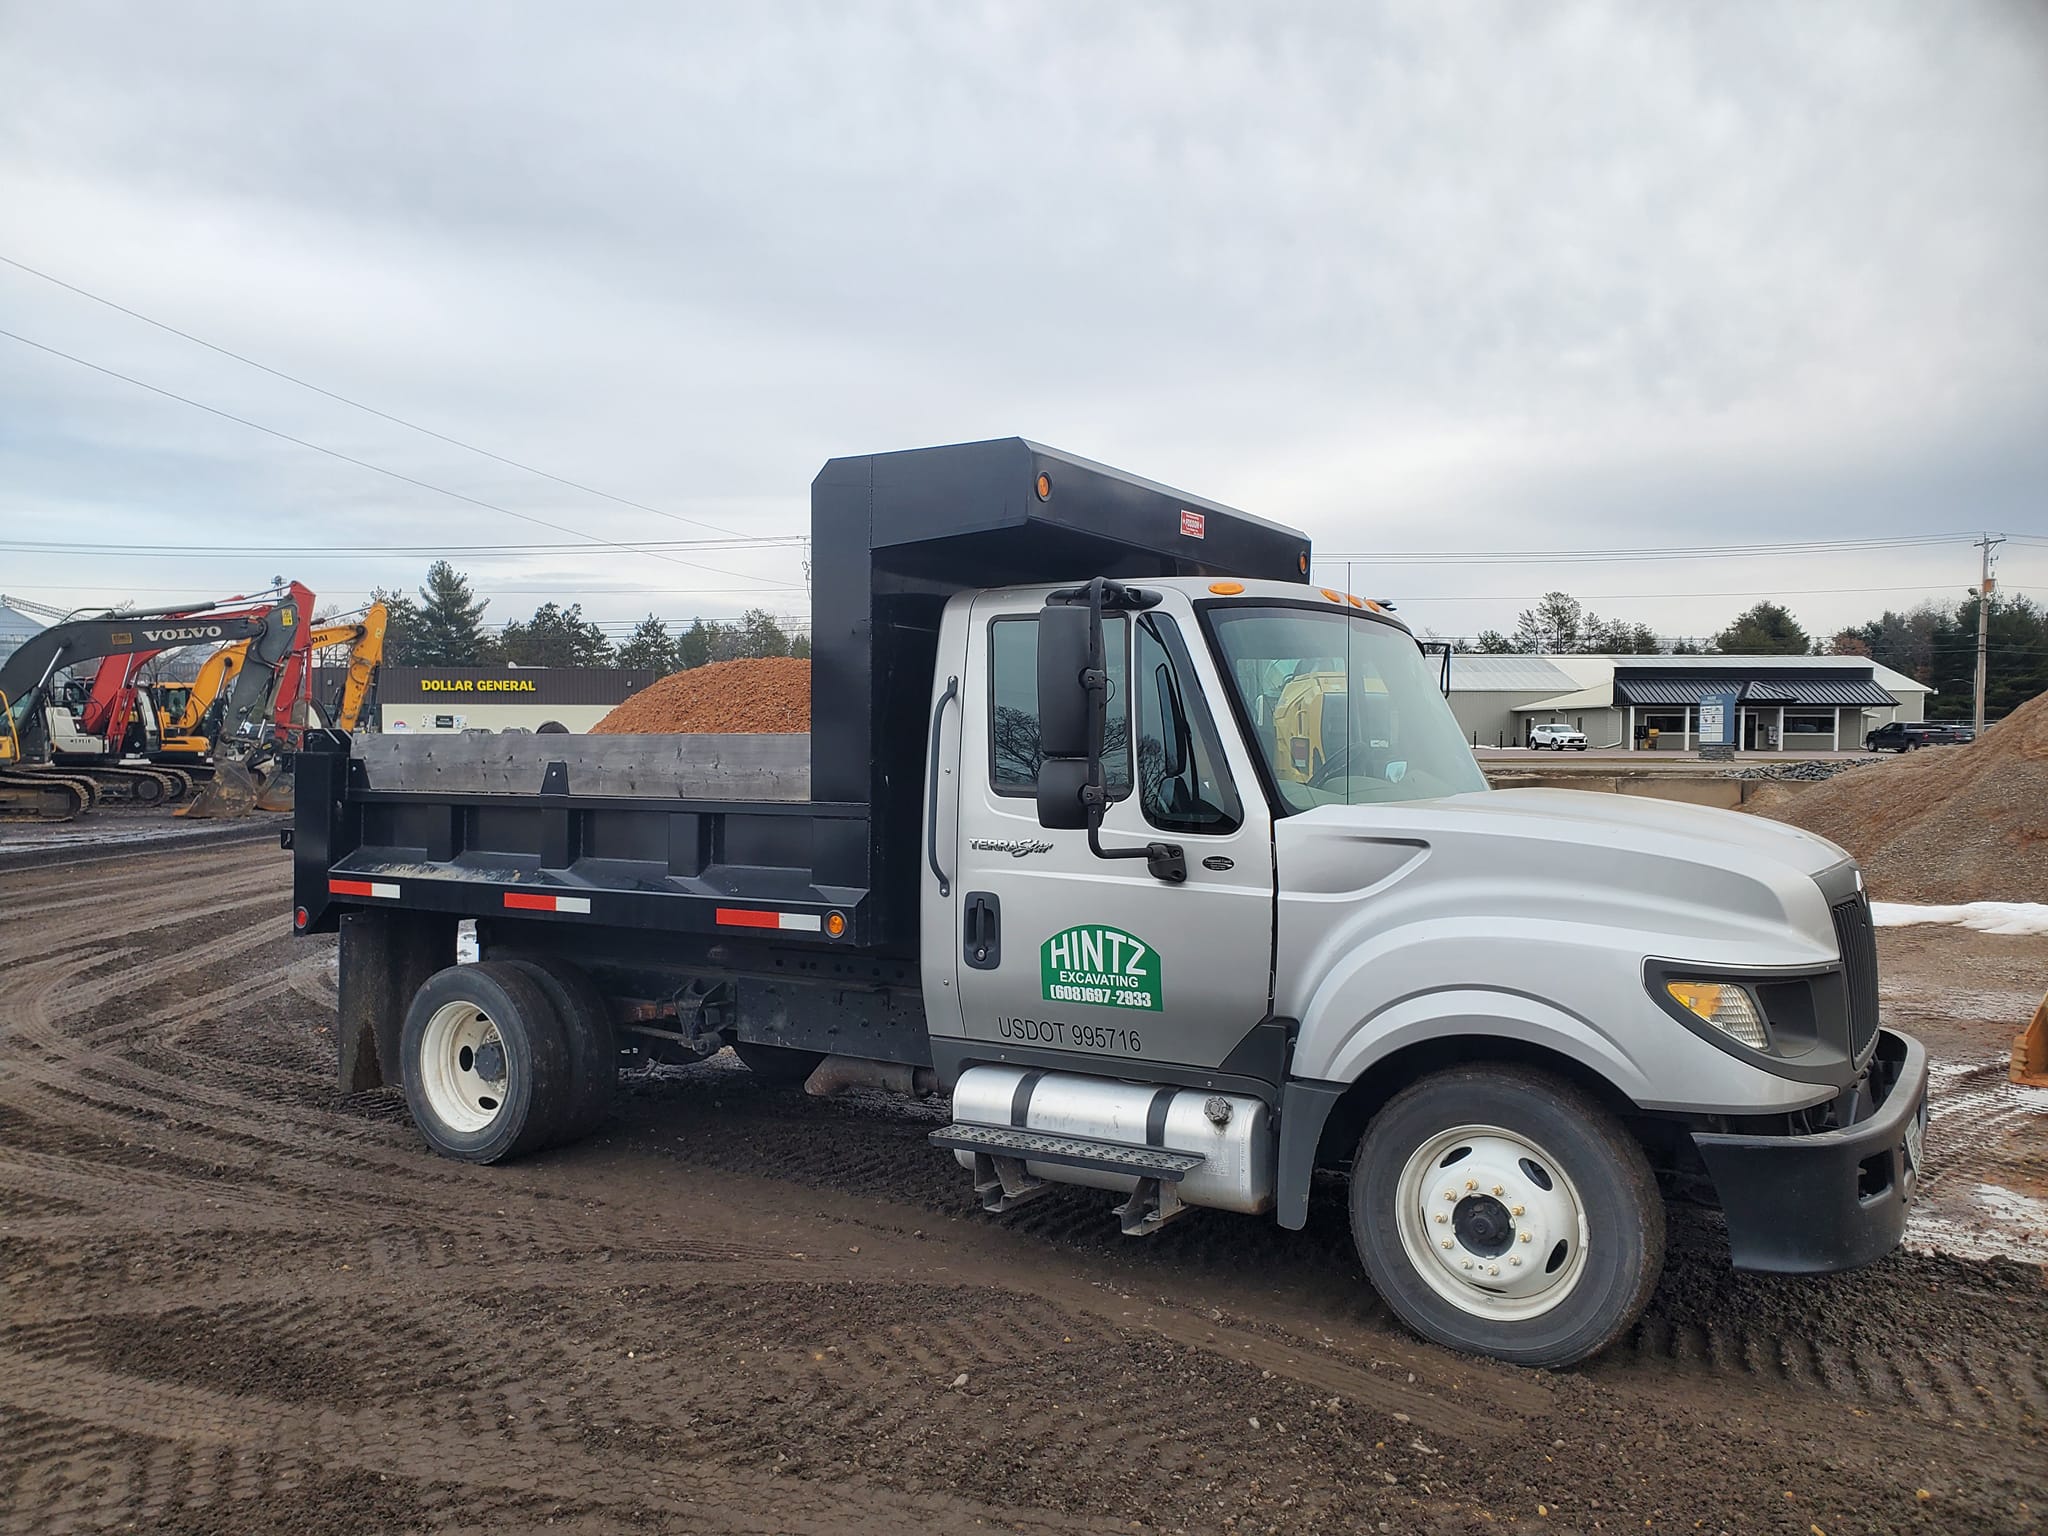 Hintz Excavating & Trucking 669 S Main St, Adams Wisconsin 53910